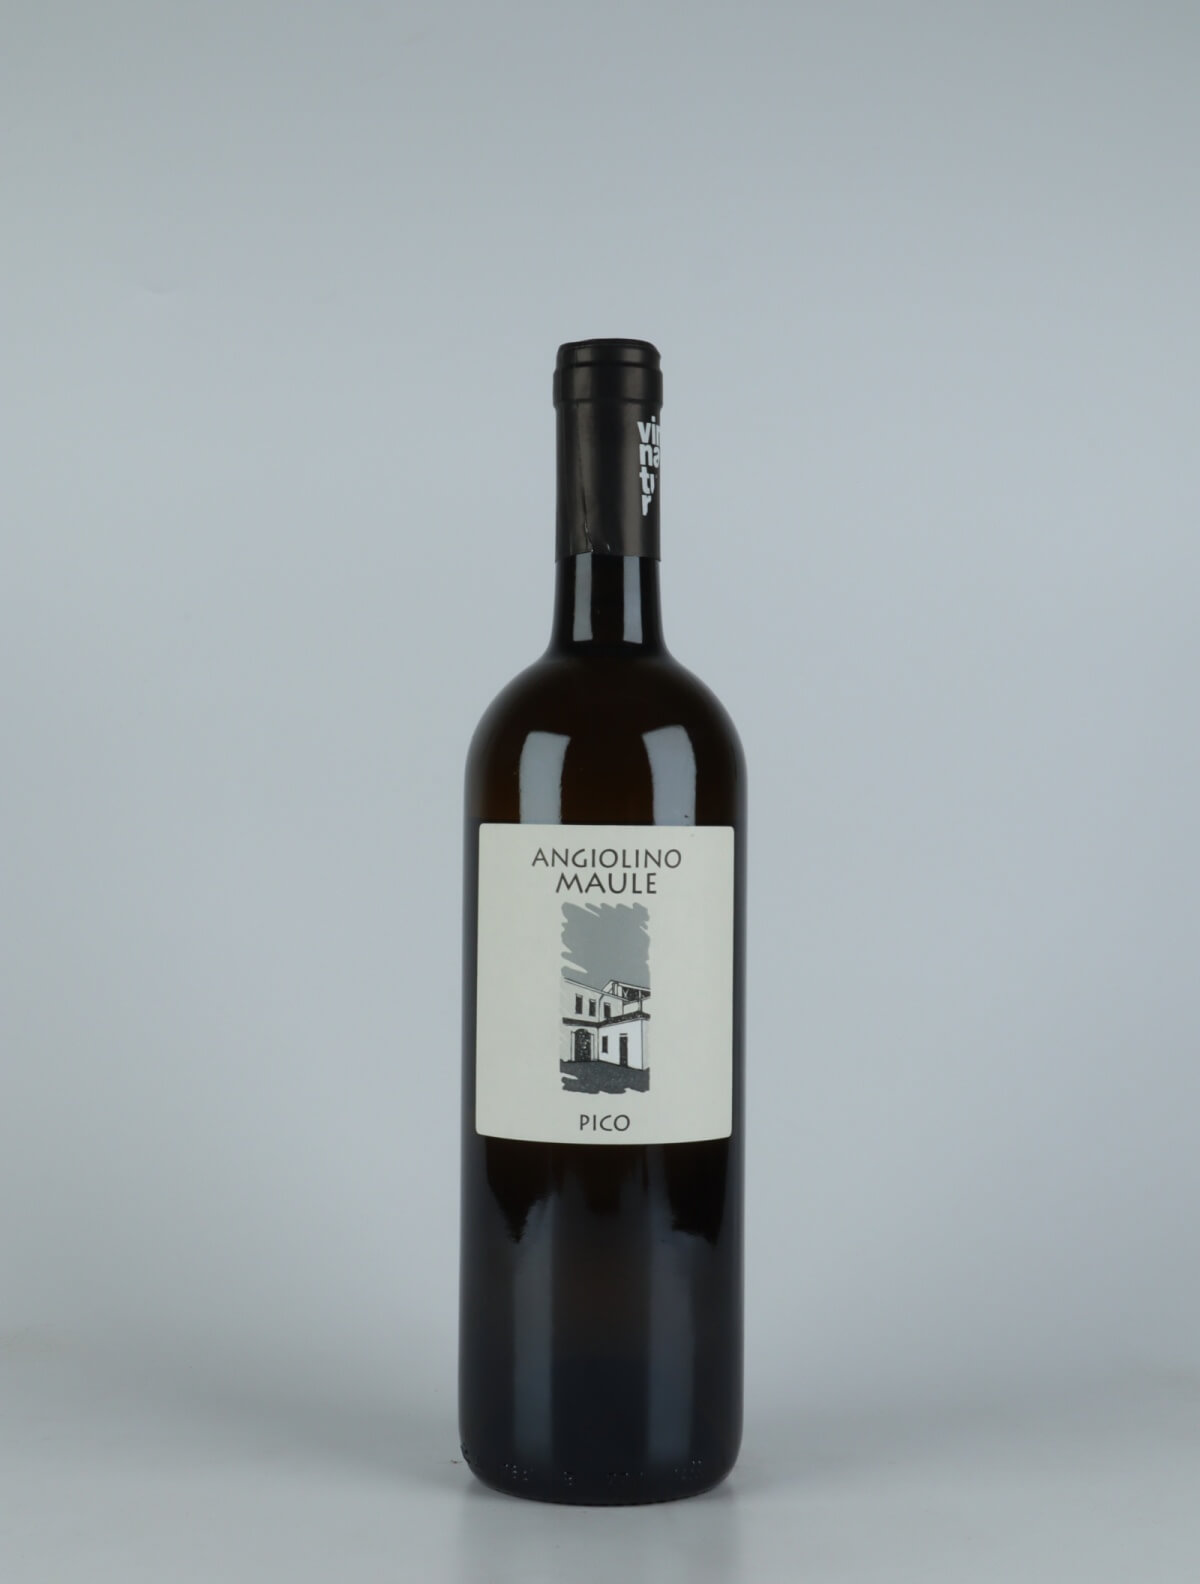 En flaske 2020 Pico Hvidvin fra La Biancara di Angiolino Maule, Veneto i Italien